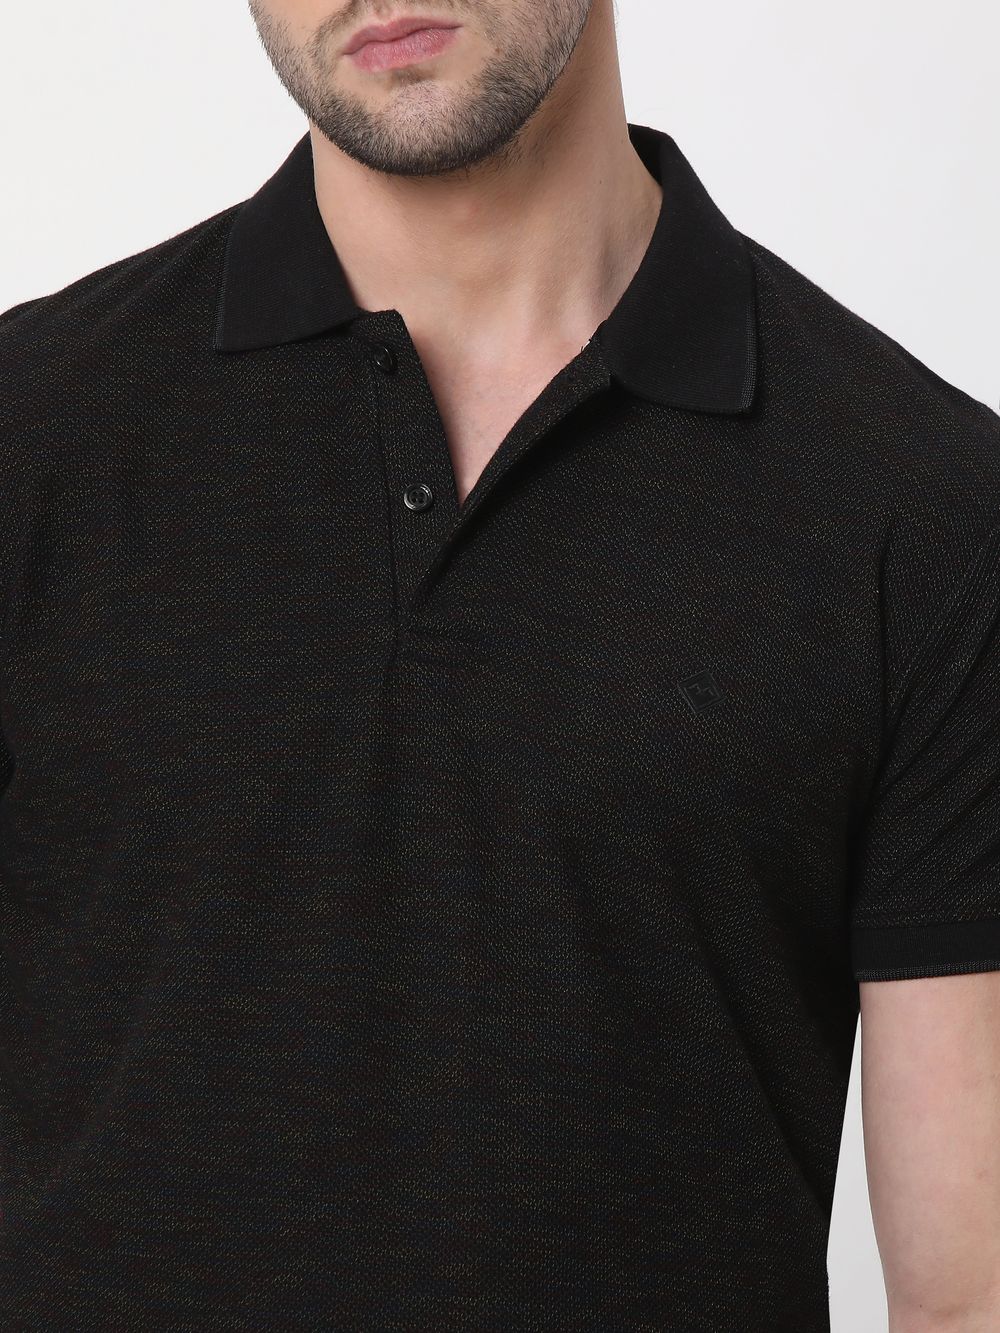 Black Space-Dyed Plain Slim Fit Polo T-Shirt